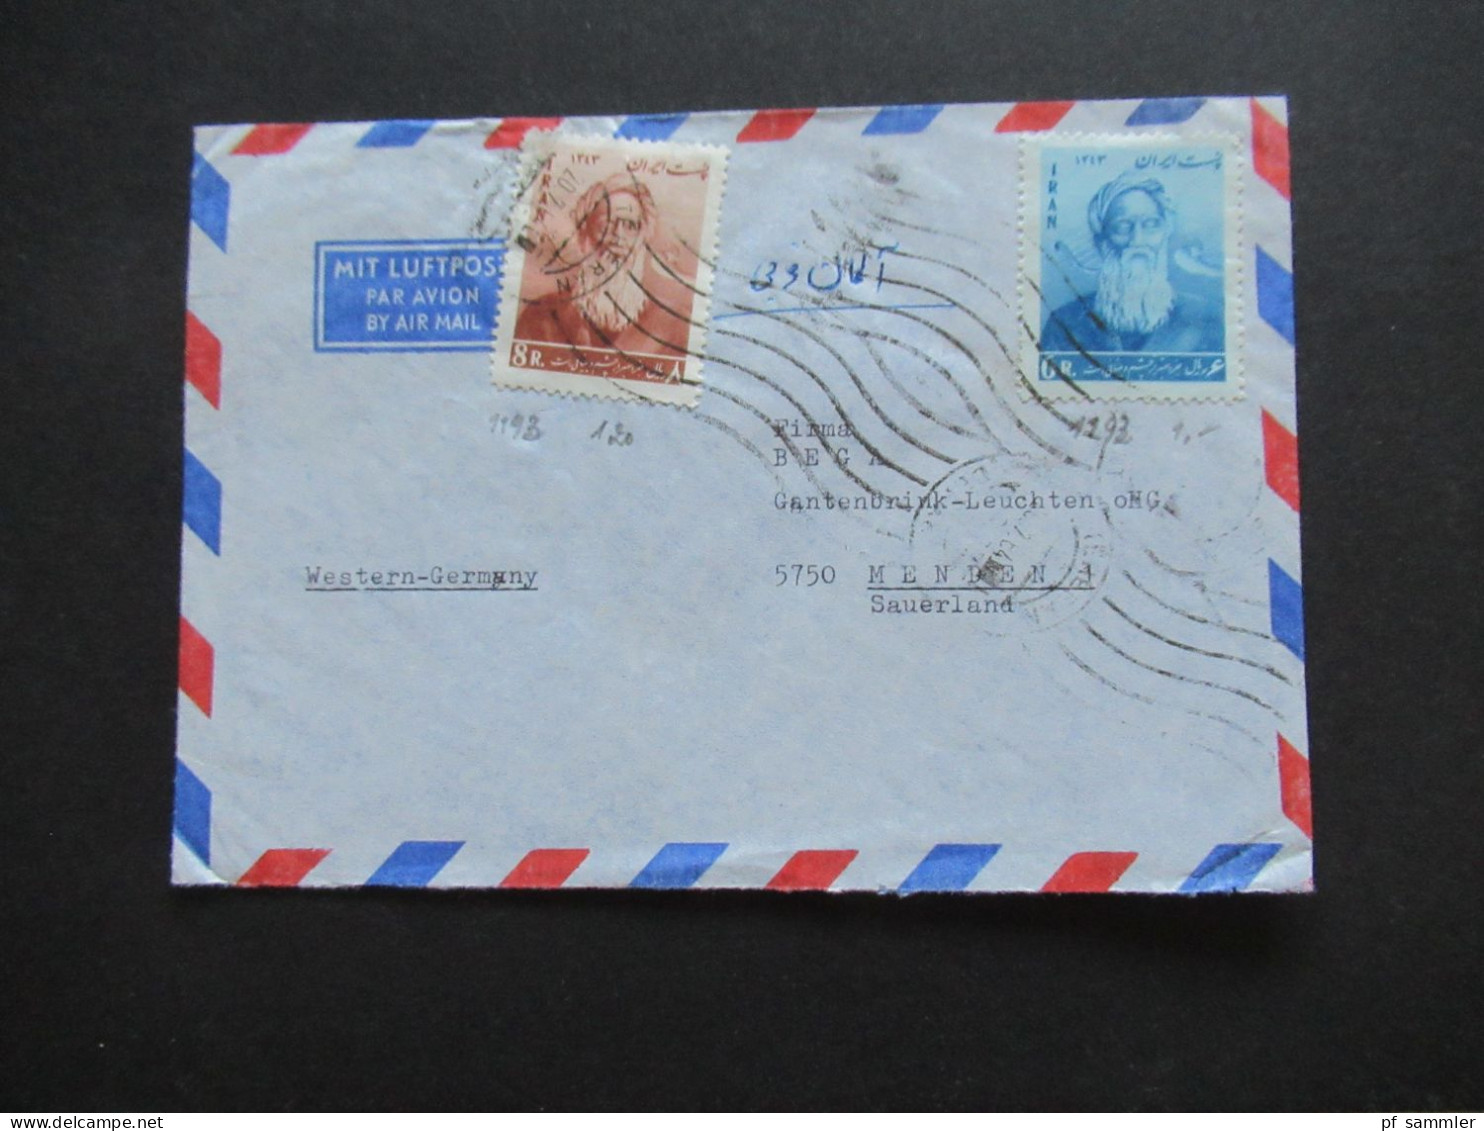 Asien Iran / Persien Teheran Persia 1960er Jahre Via Air Mail Luftpost 4 Belege Auslandsbriefe - Iran